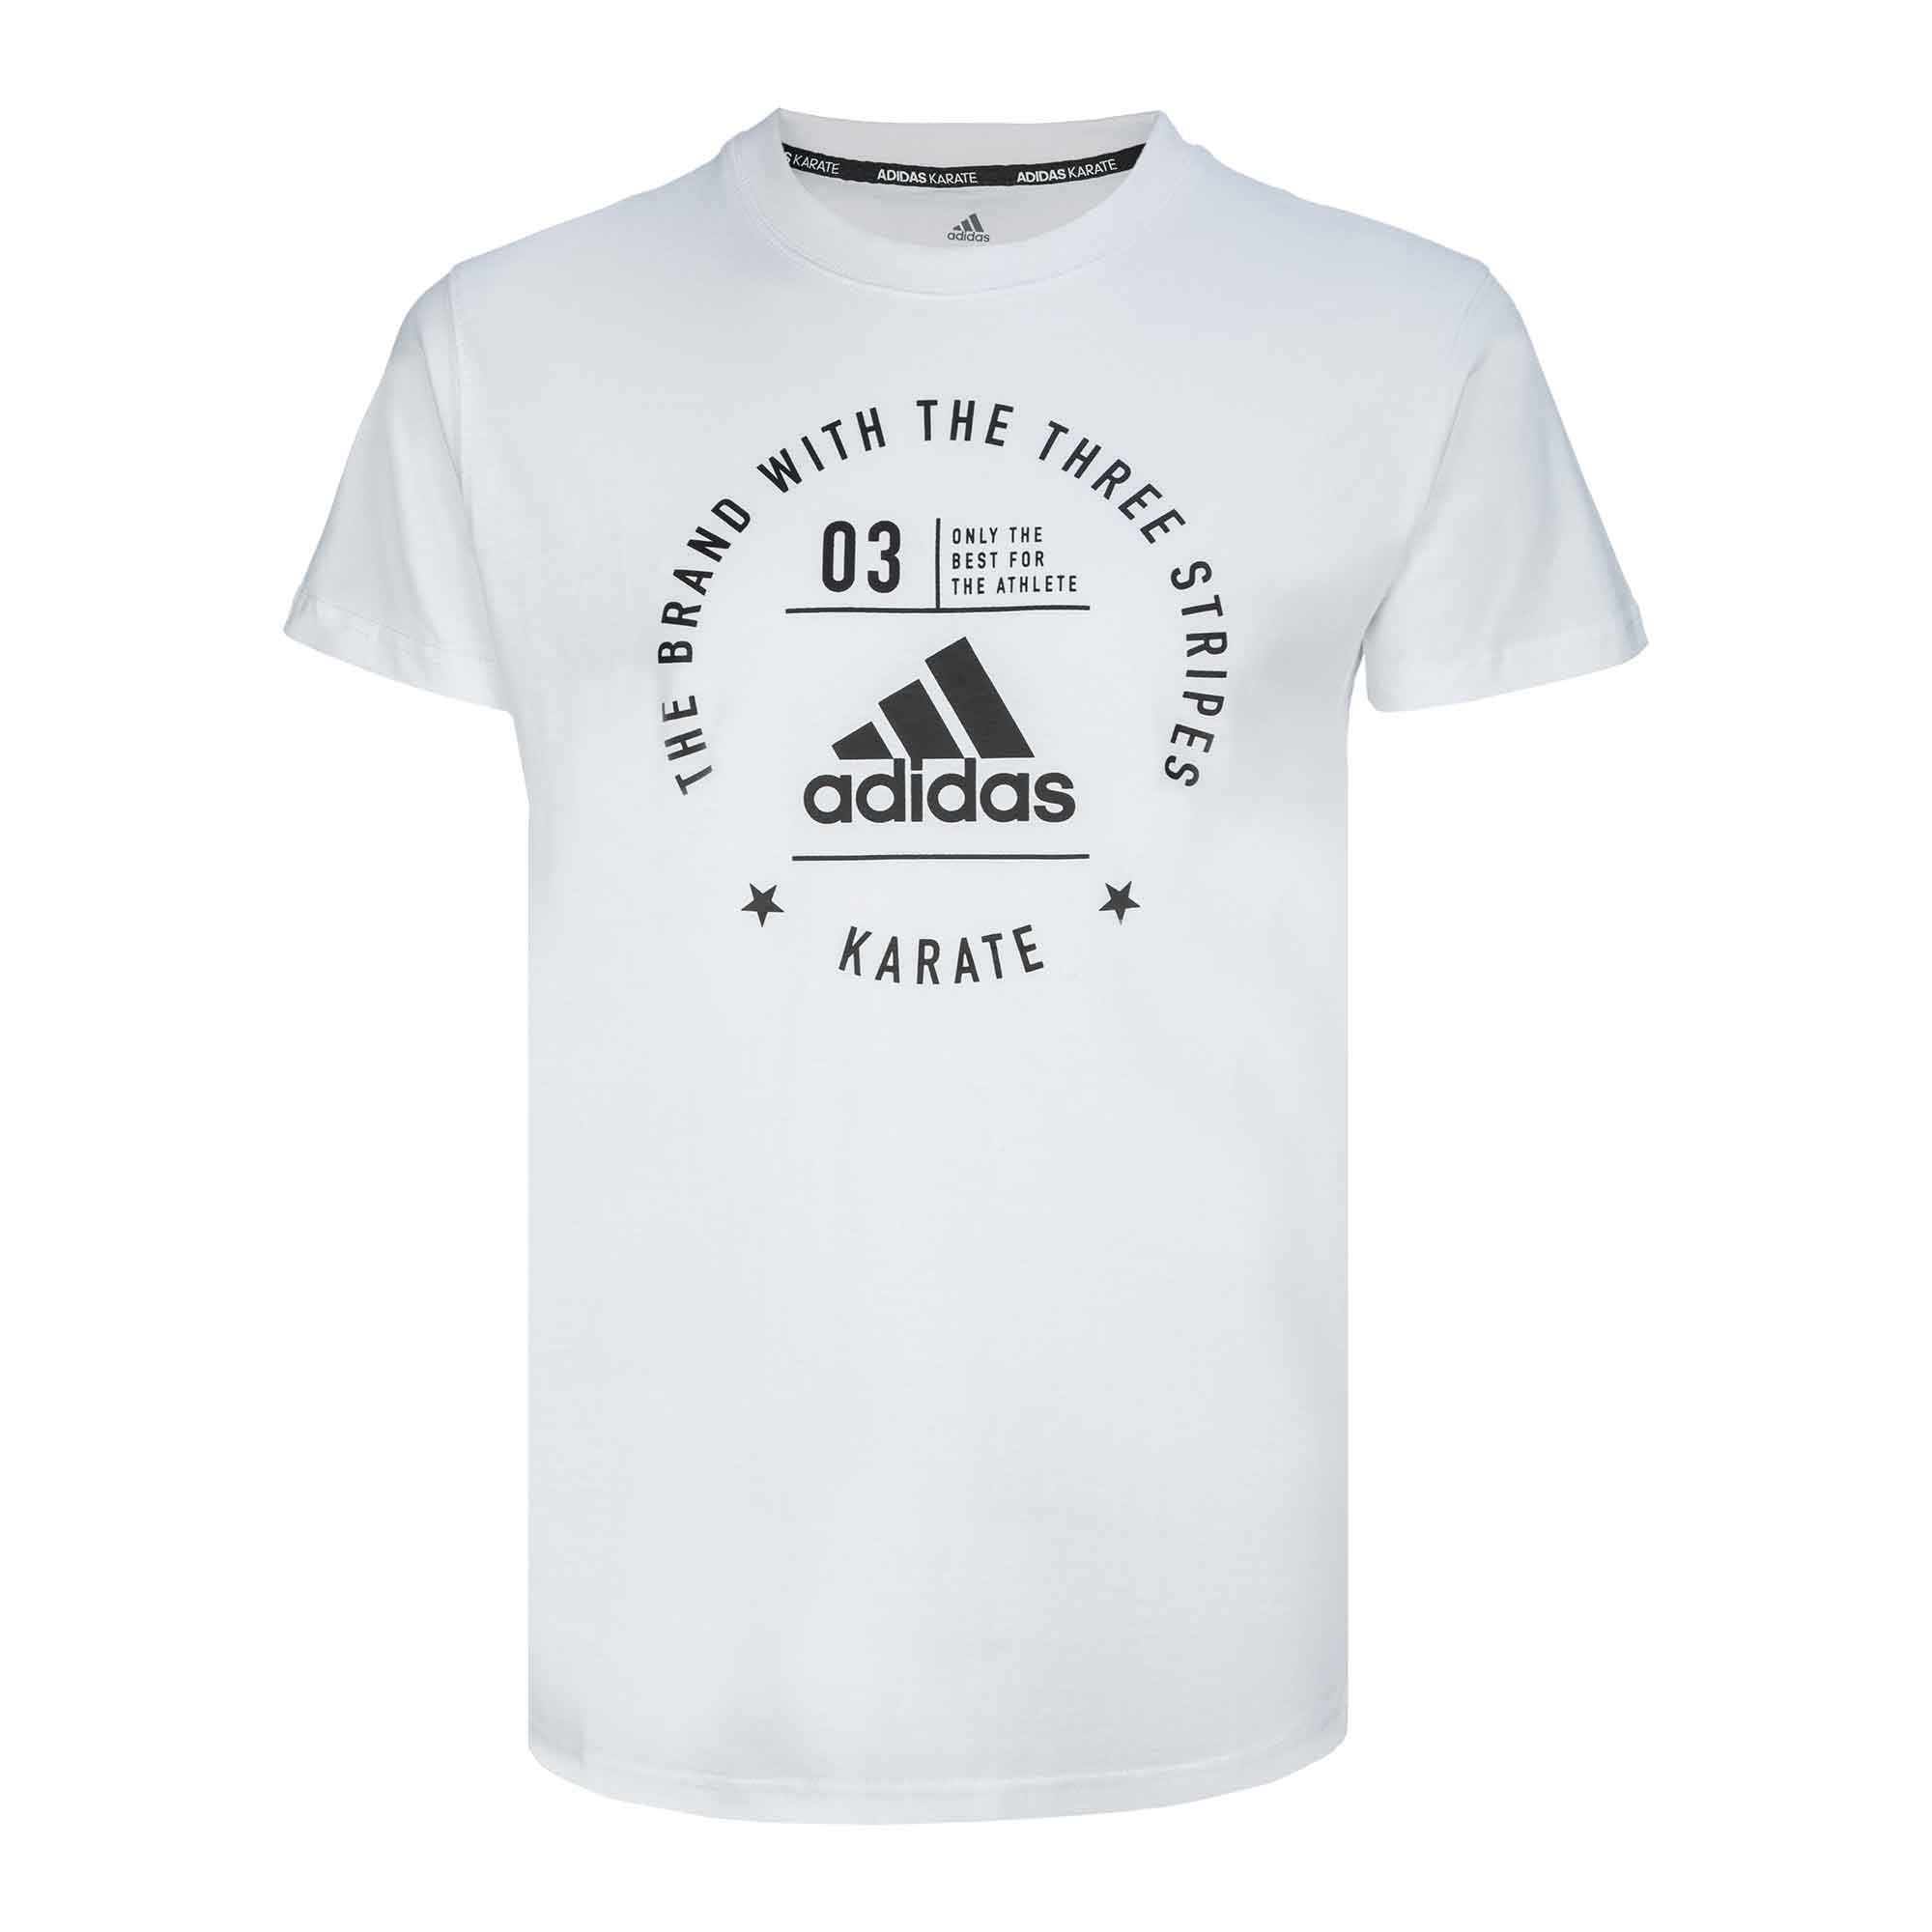 Футболка The Brand With The Three Stripes T-Shirt Karate бело-черная (размер S)